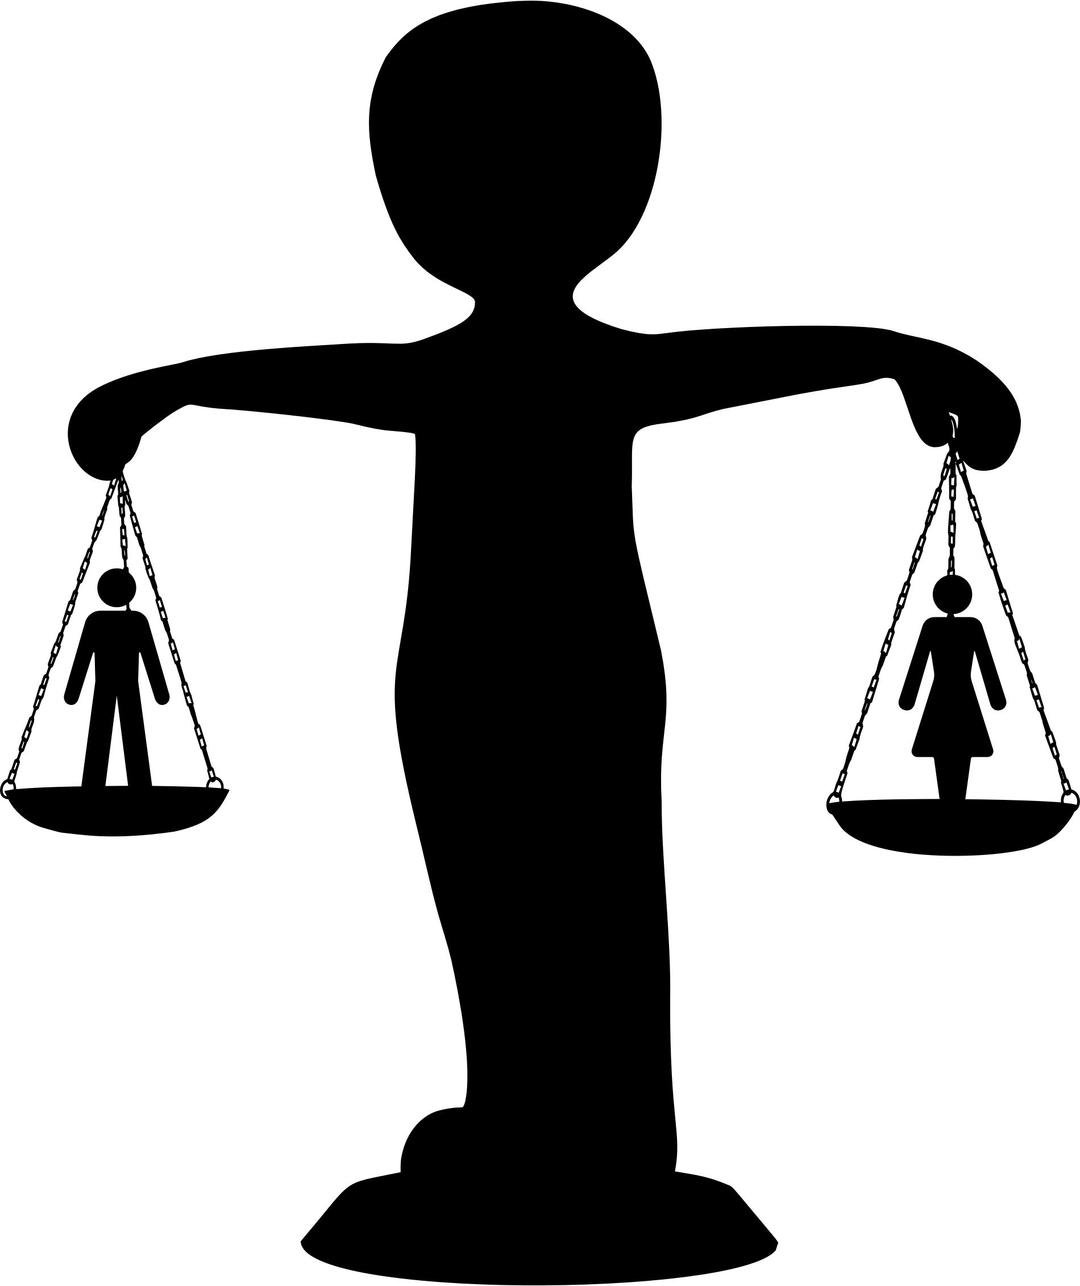 Gender Equality Justice Scales png transparent